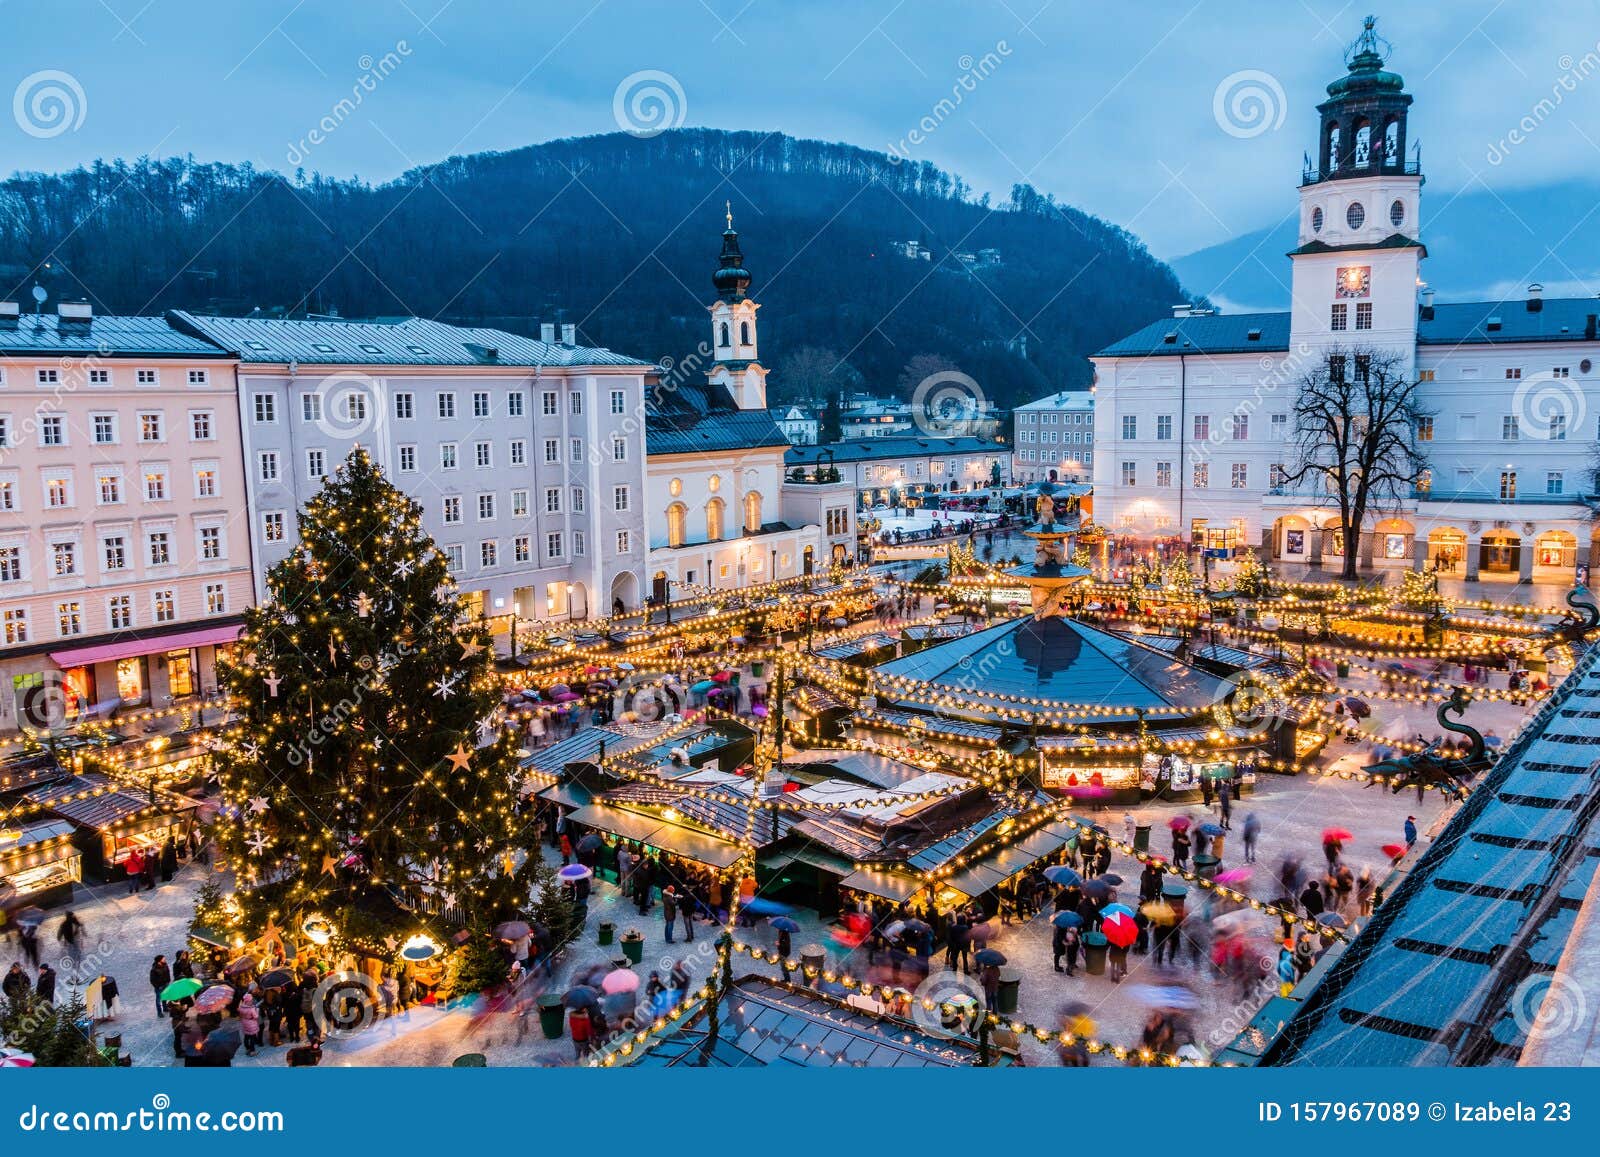 salzburg, austria. christmas market  in the old town of salzburg.